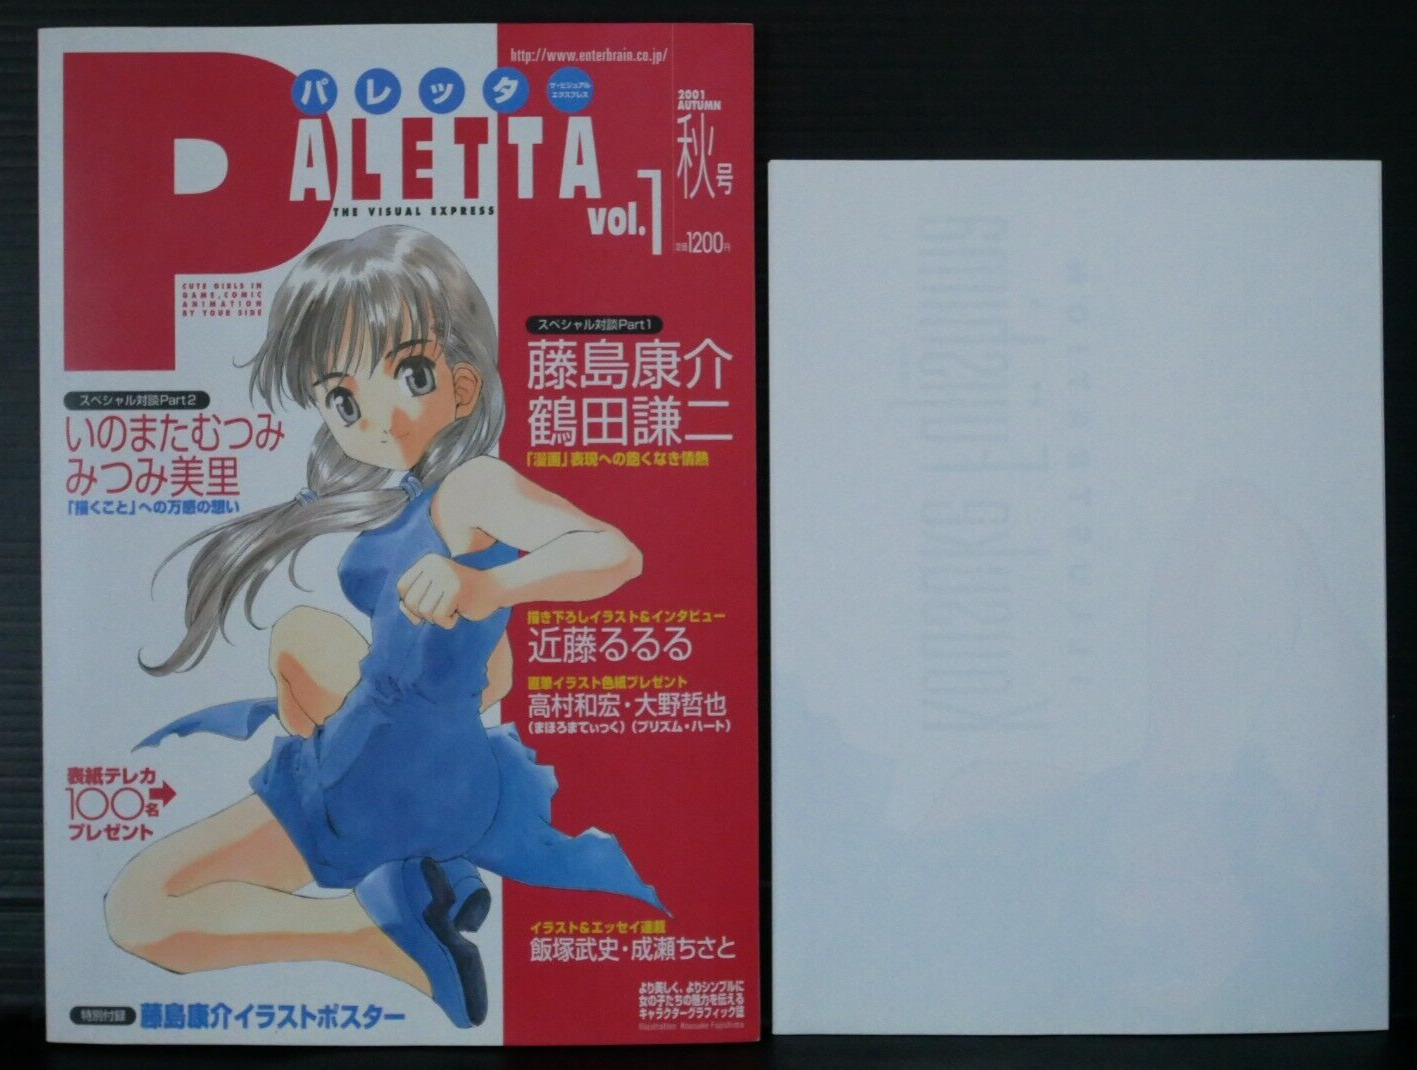 Paletta vol.1 The visual express Book Kosuke Fujishima & Kenji Tsuruta W/Poster